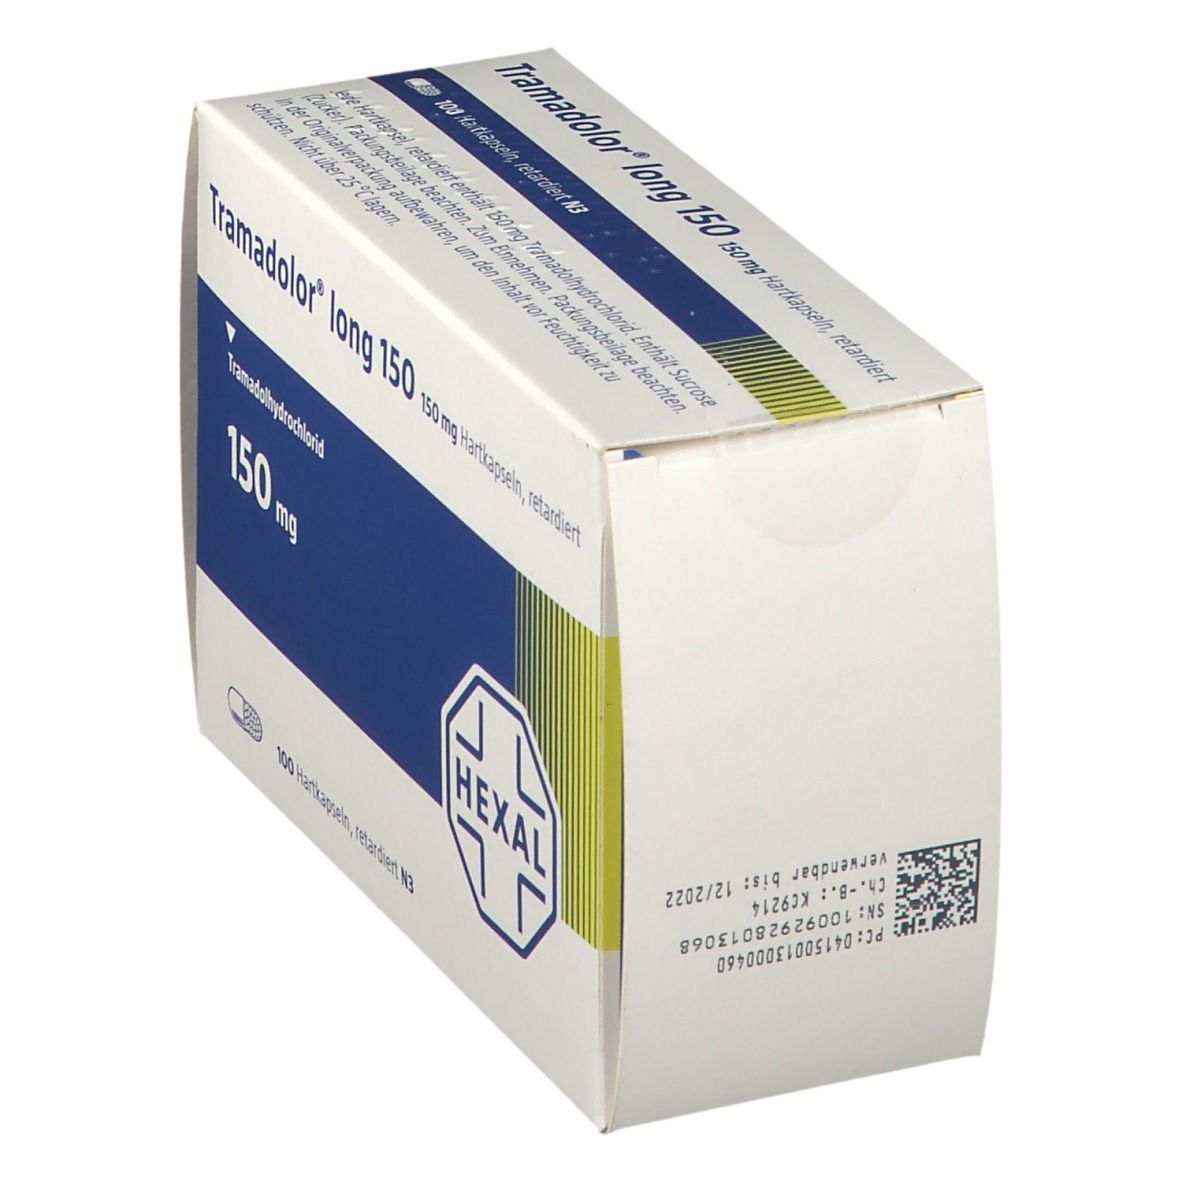 Tramadolor® long 150 mg retard